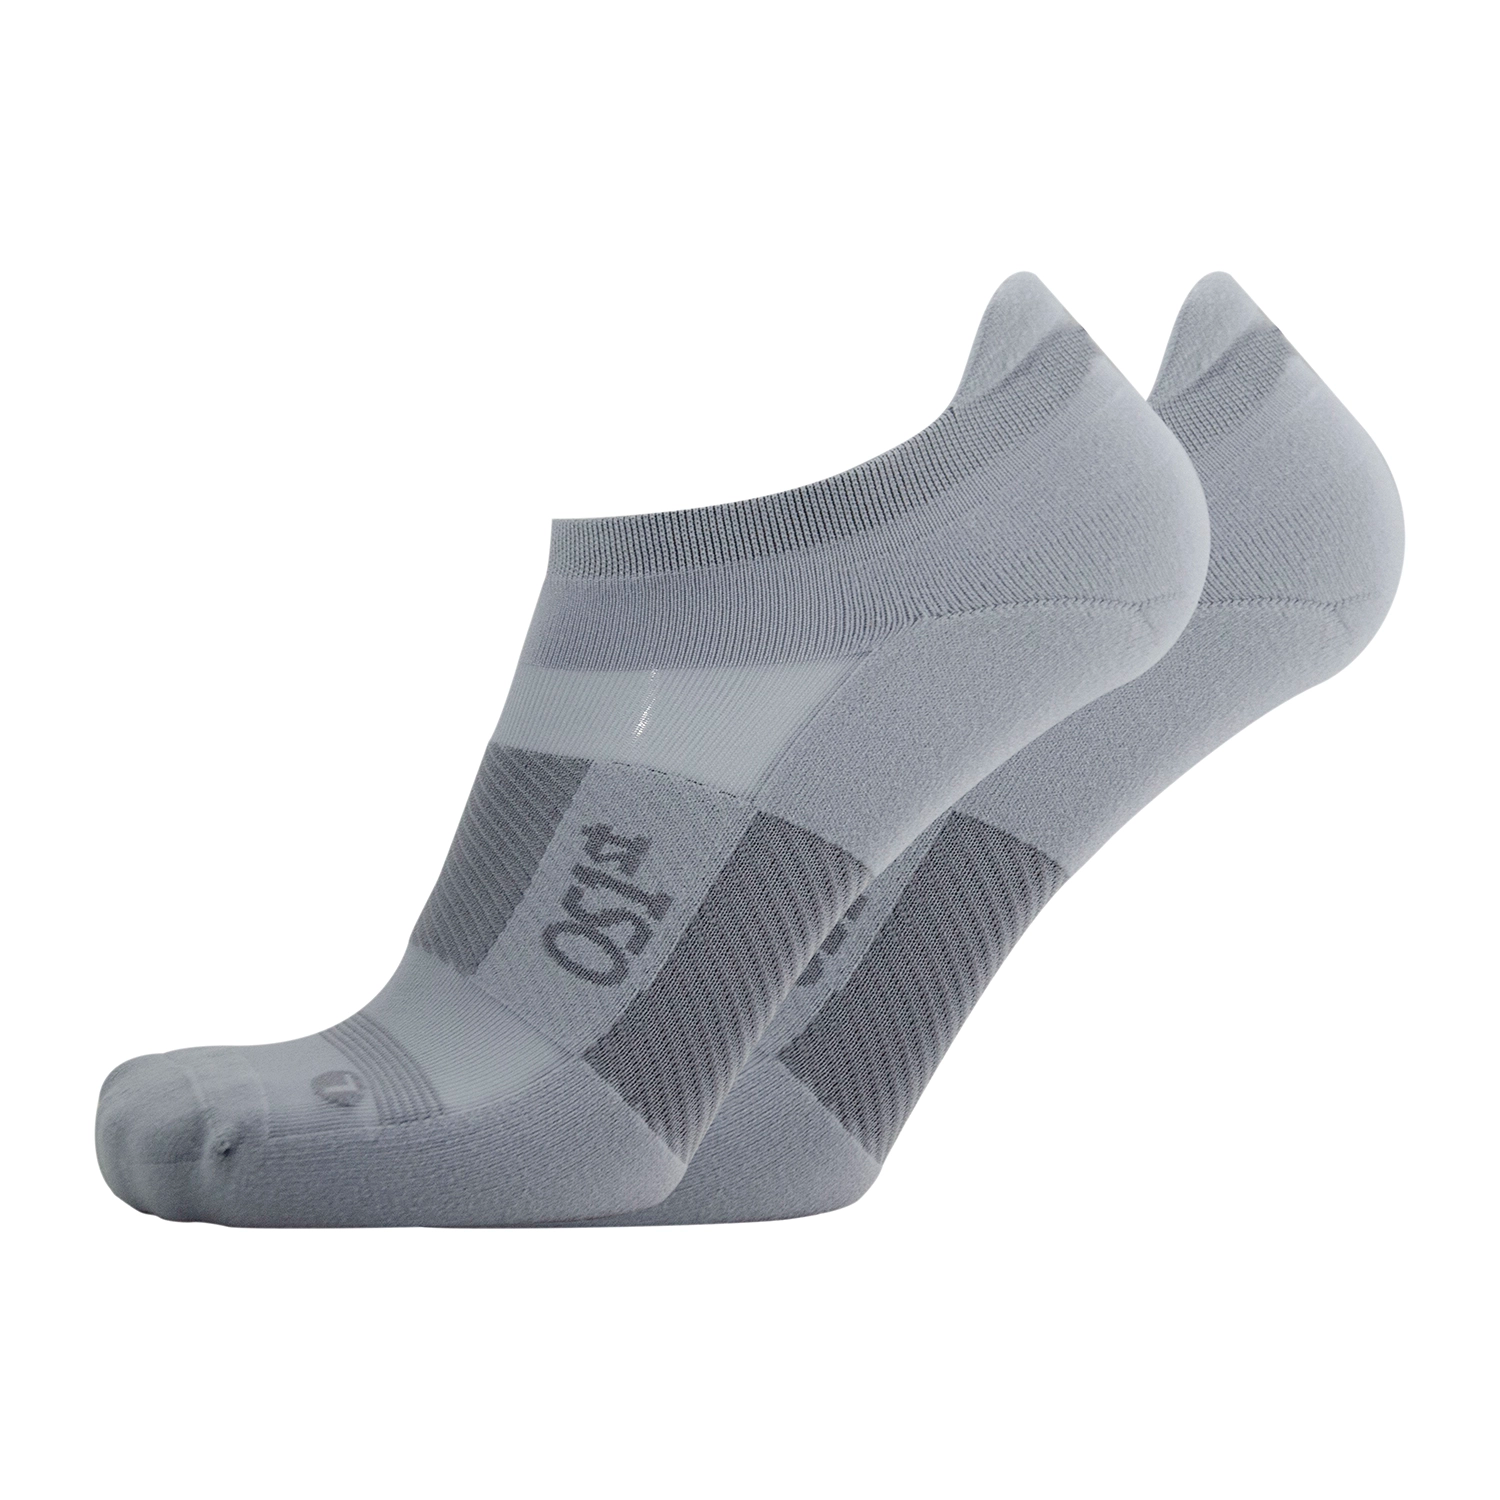 Thin air performance socks in grey | OS1st